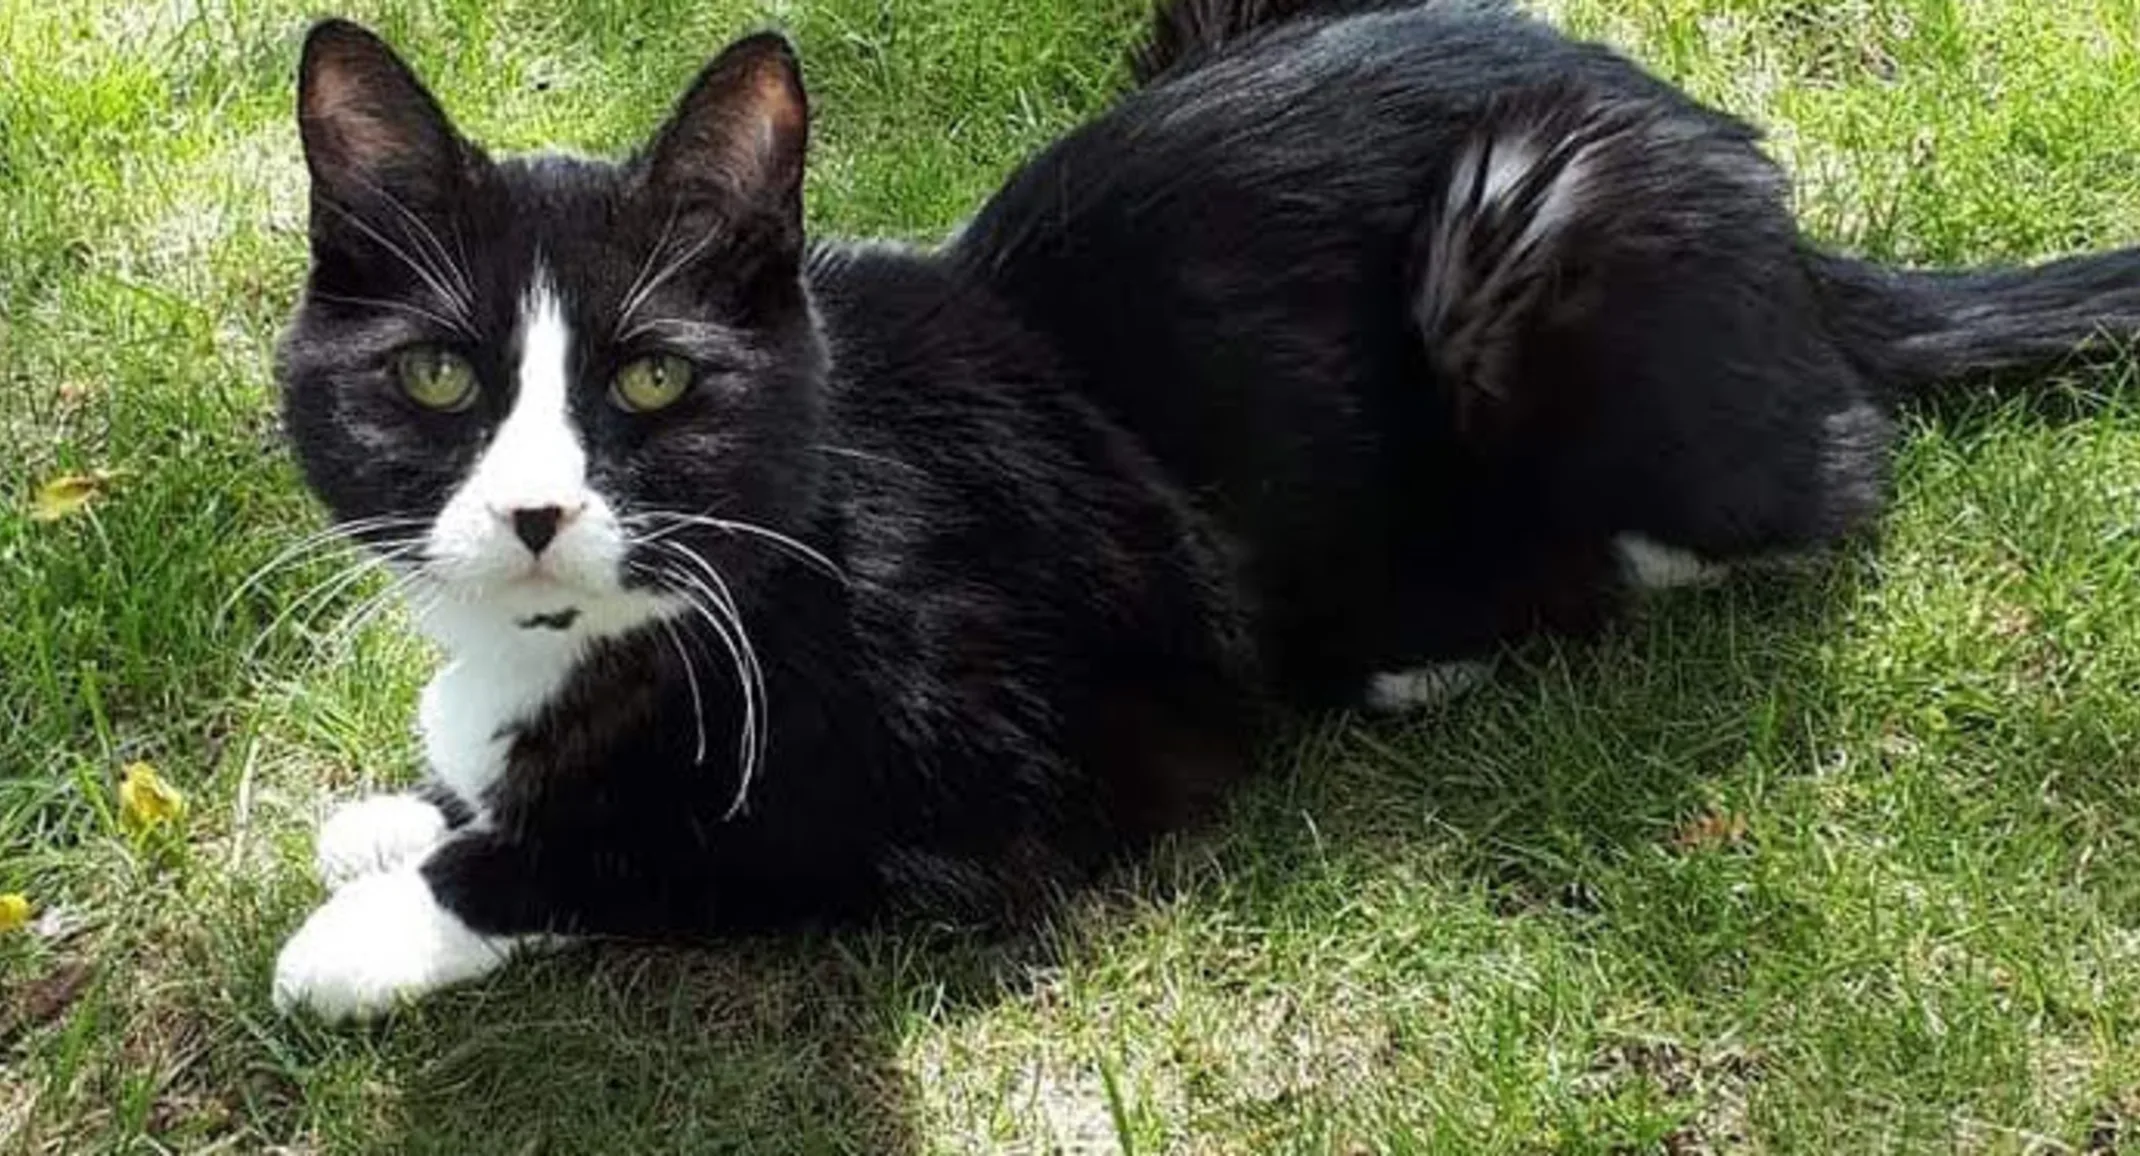 A cat sitting on grass